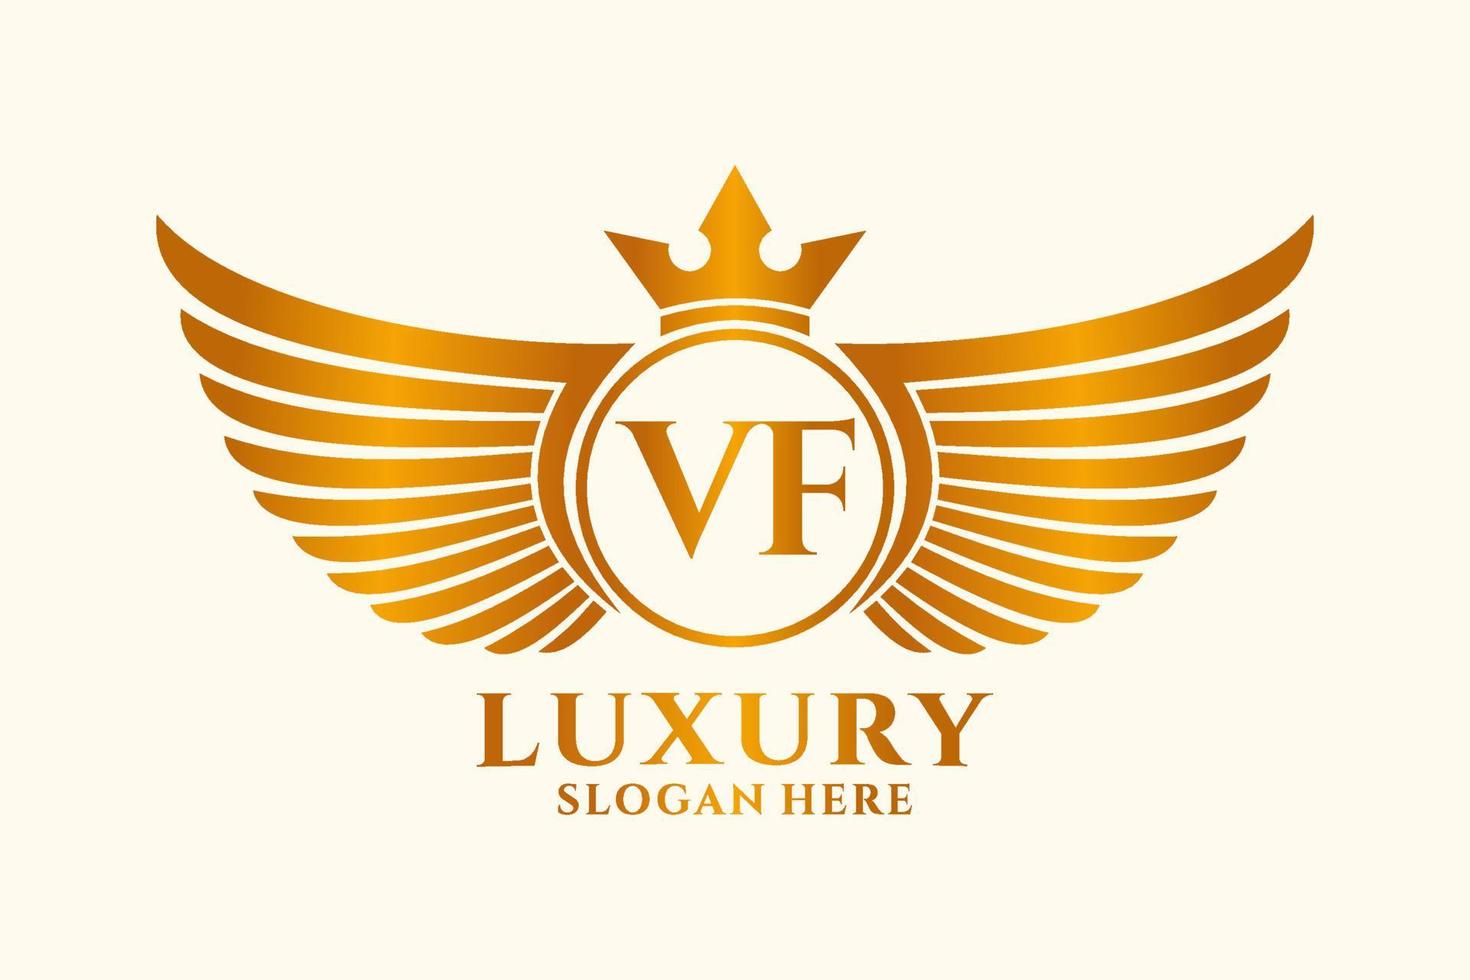 luxe Koninklijk vleugel brief vf kam goud kleur logo vector, zege logo, kam logo, vleugel logo, vector logo sjabloon.